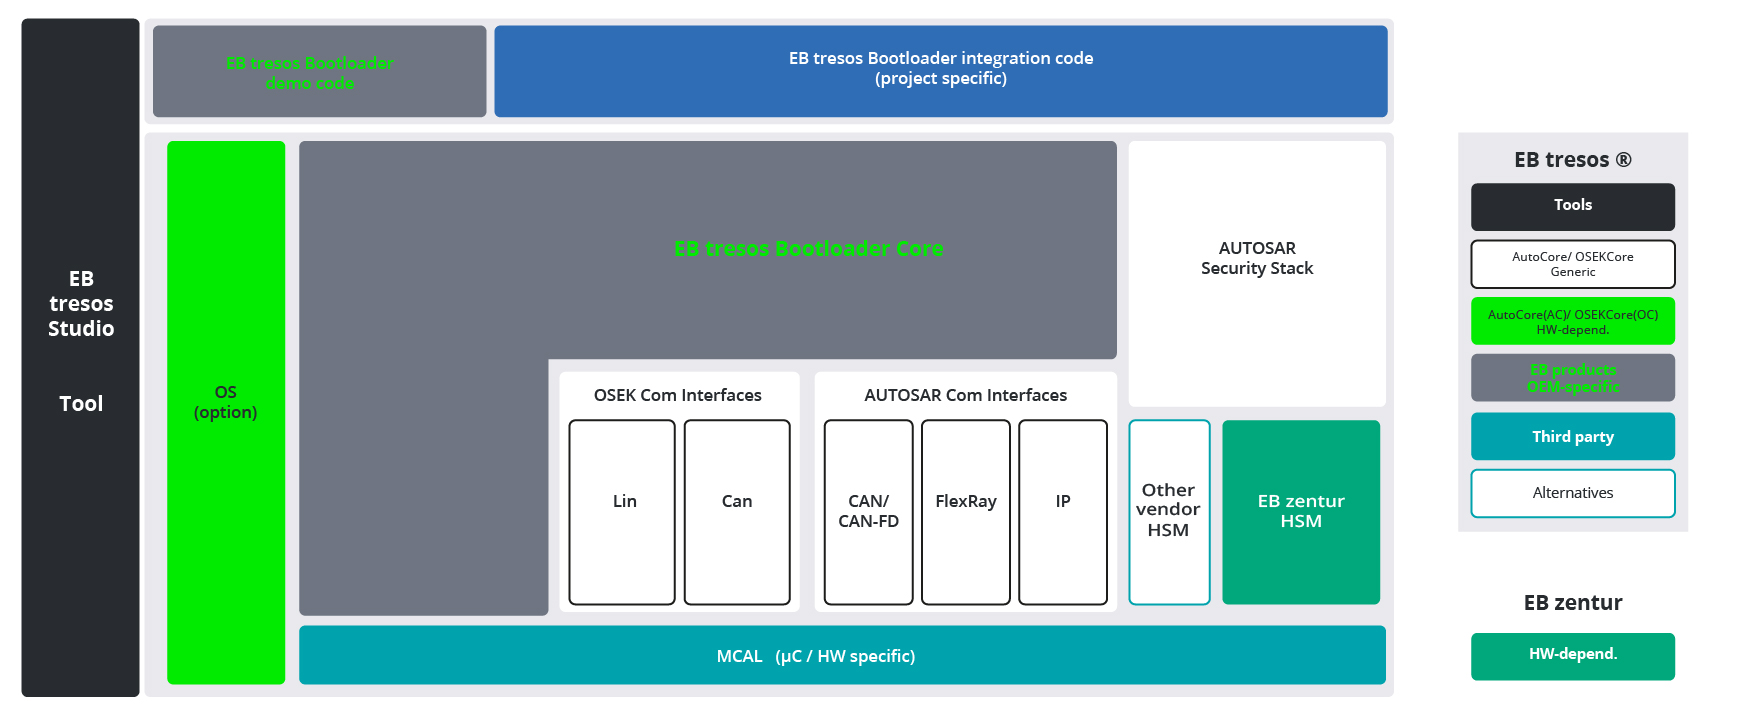 EB tresos Bootloader architecture